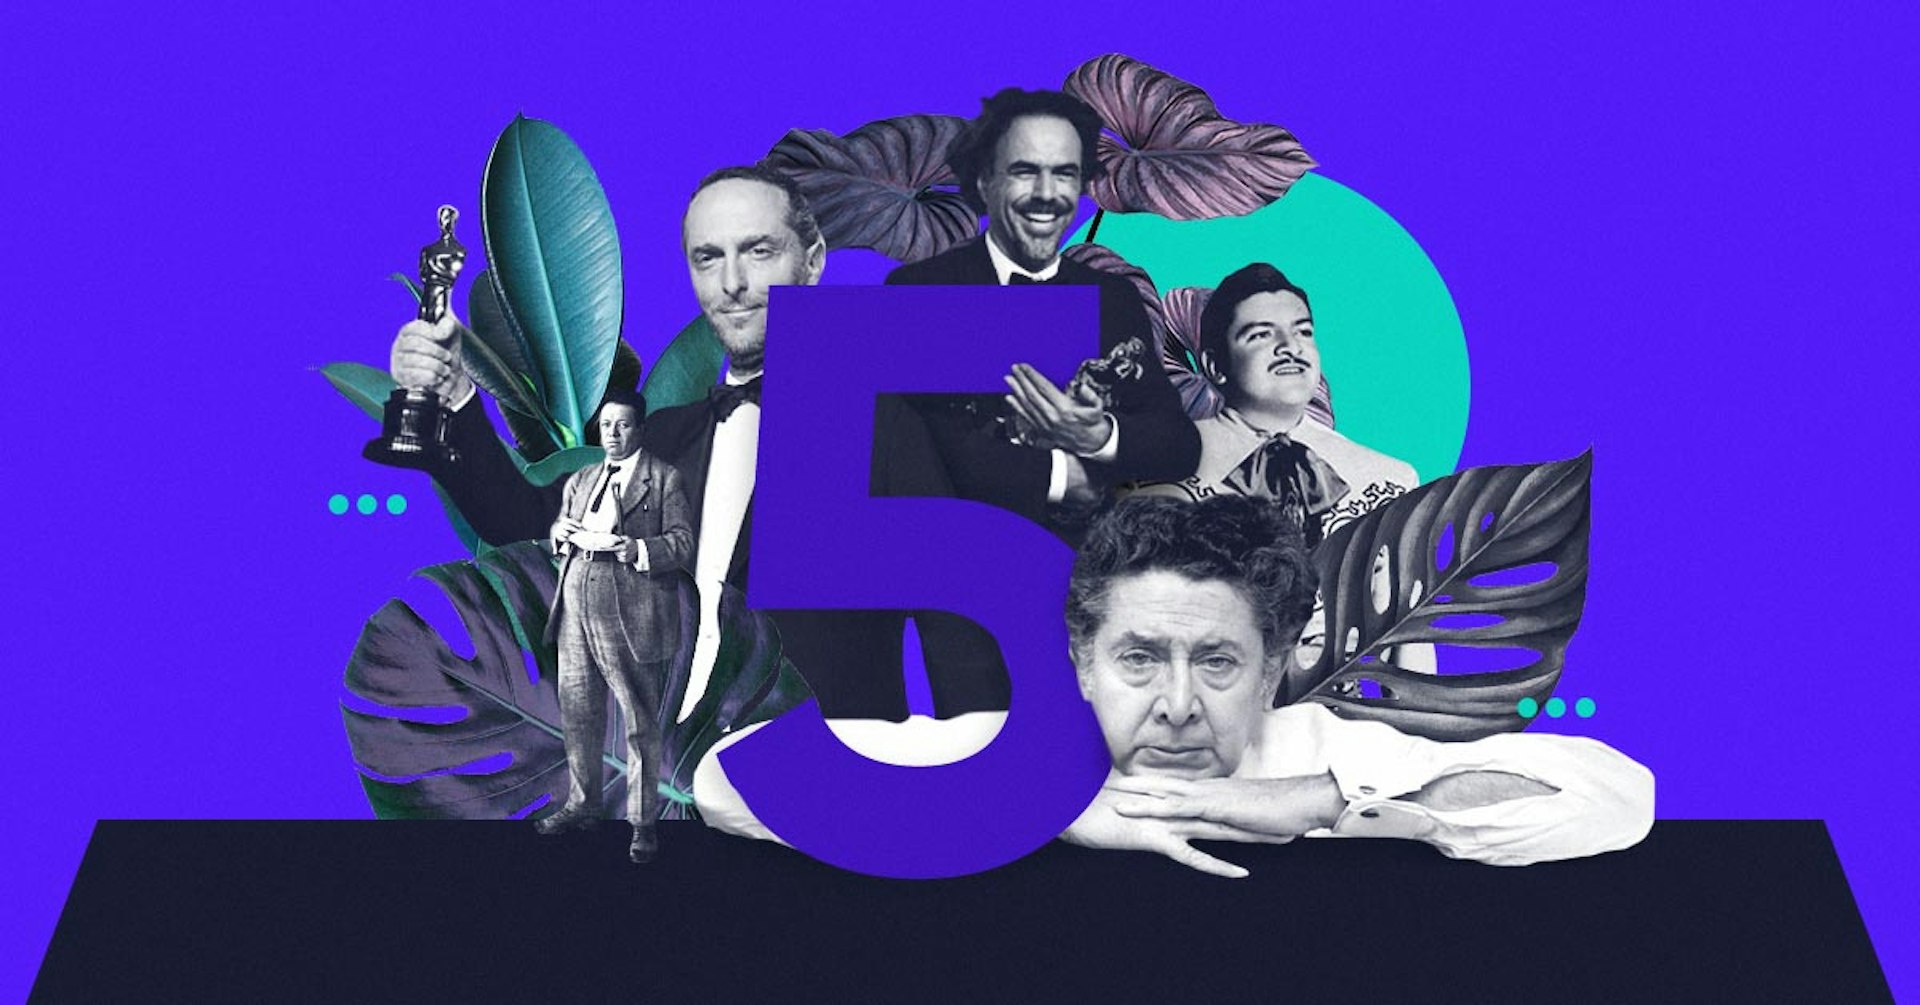 ¡Viva México! Conoce a +25 artistas mexicanos que conquistaron el mundo